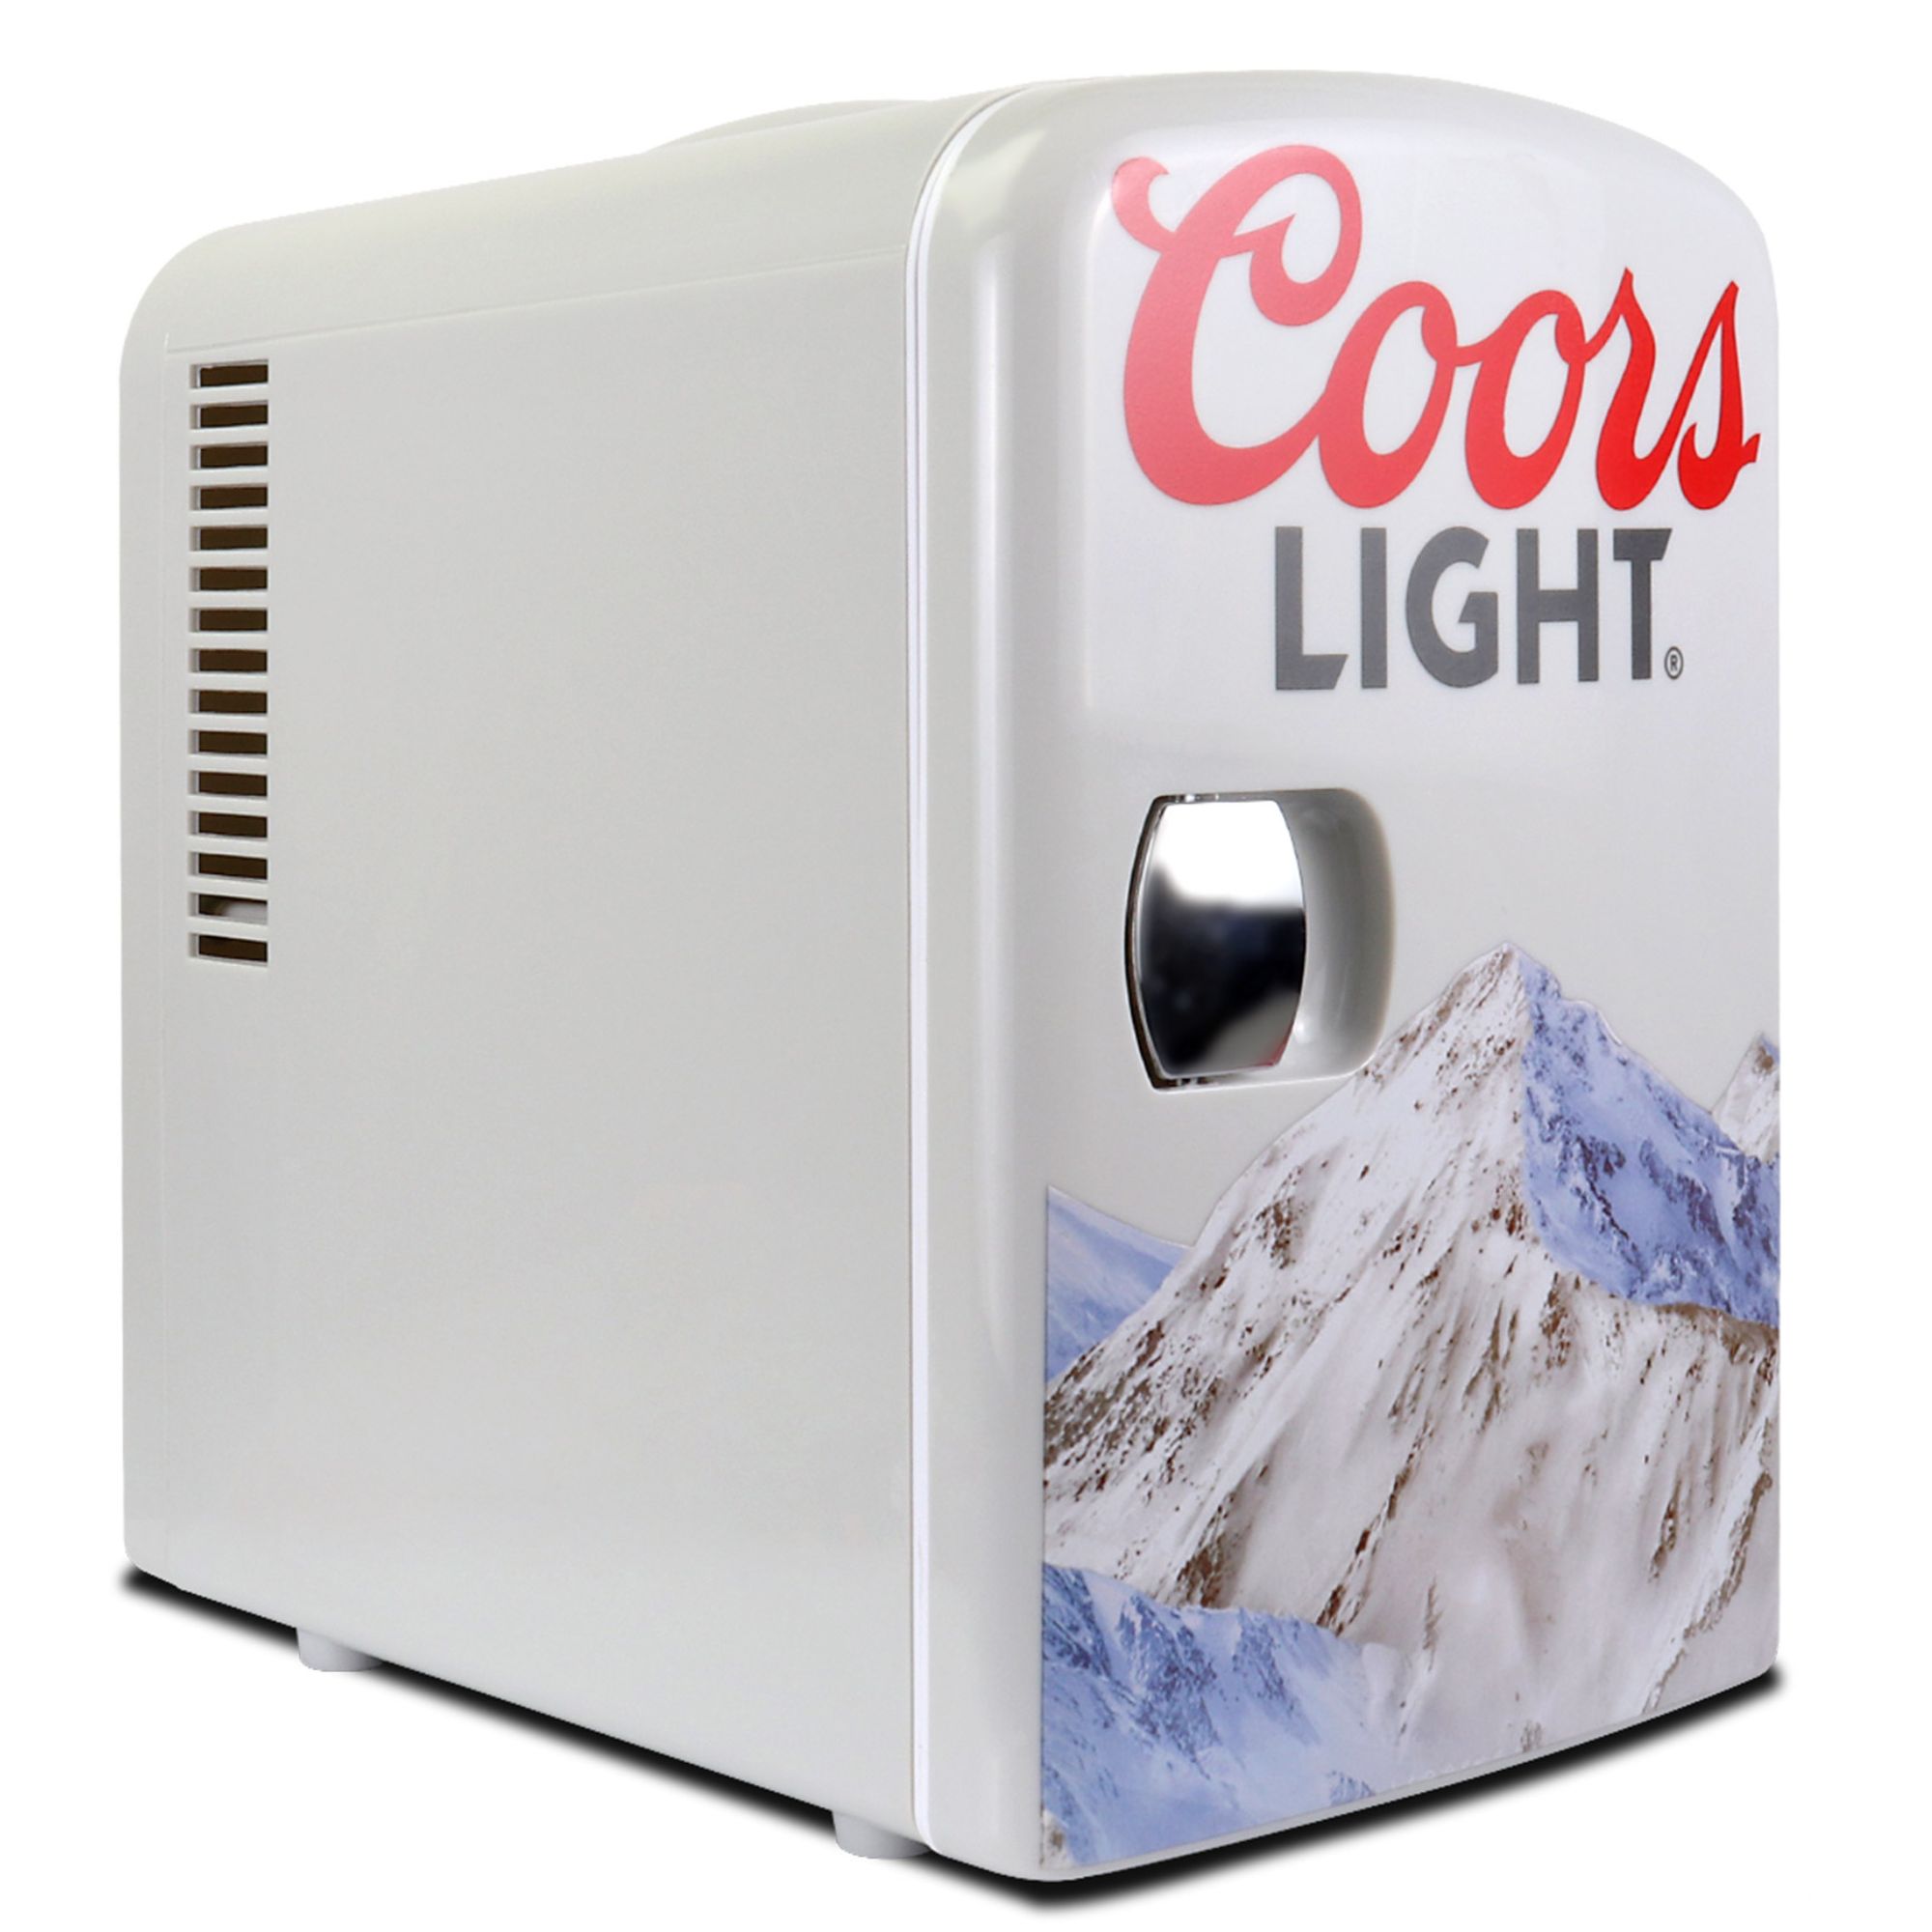 Coors Light 6 Can Mini Fridge 4L Mini Electric Cooler Travel Compact Portable 12V Car Cooler Gray - image 1 of 7